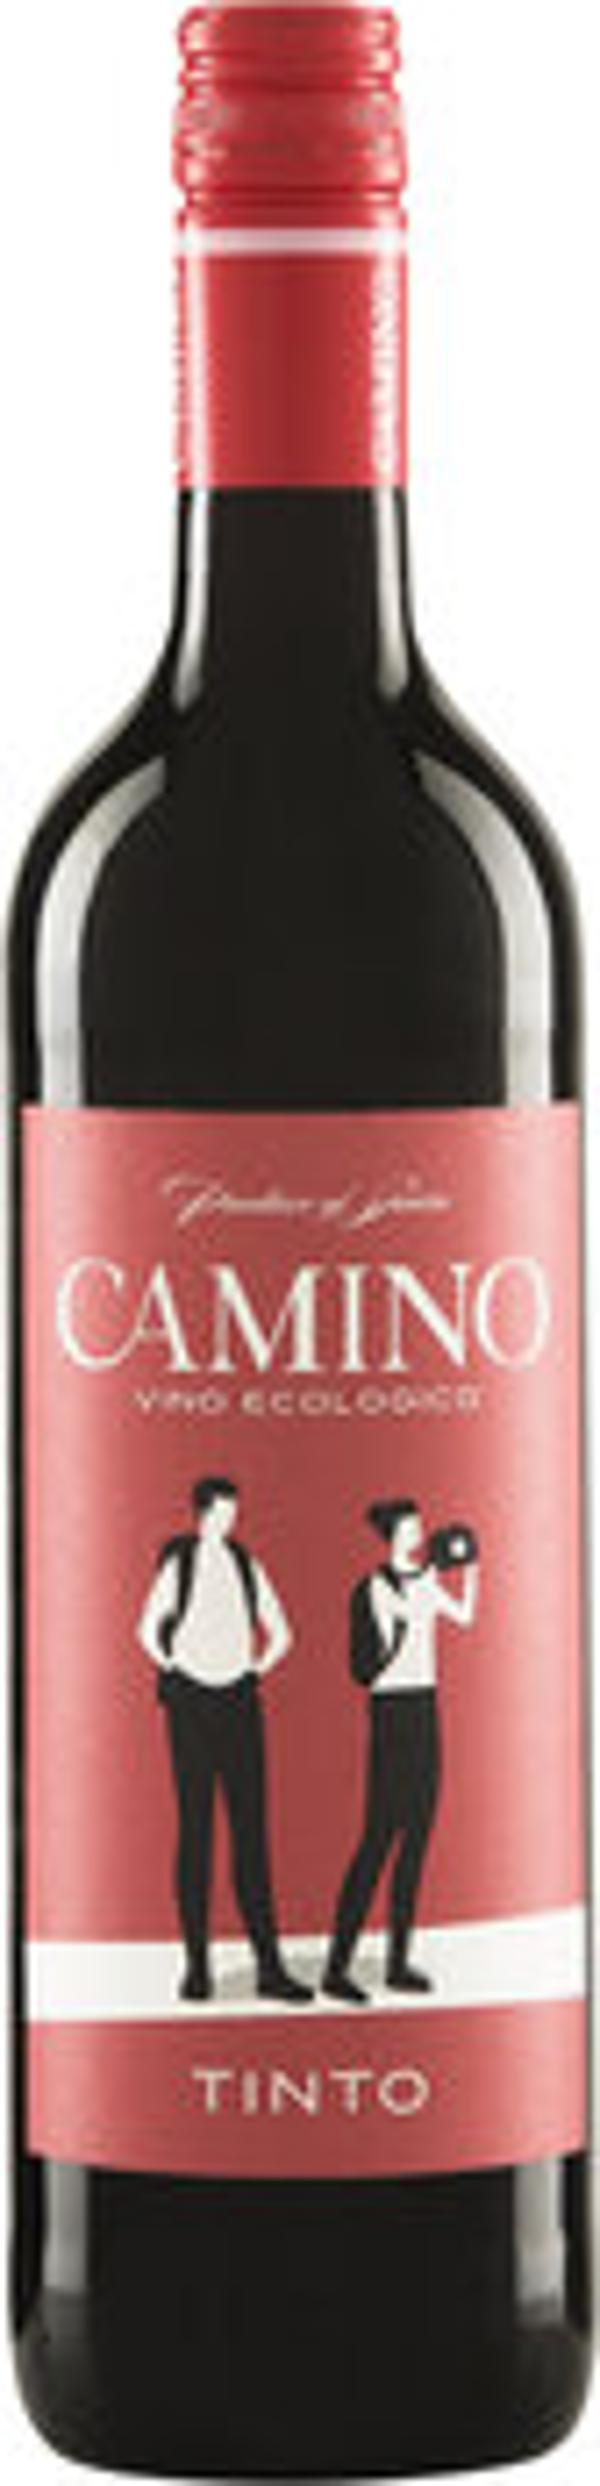 Produktfoto zu Camino tinto Rotwein 0,75L